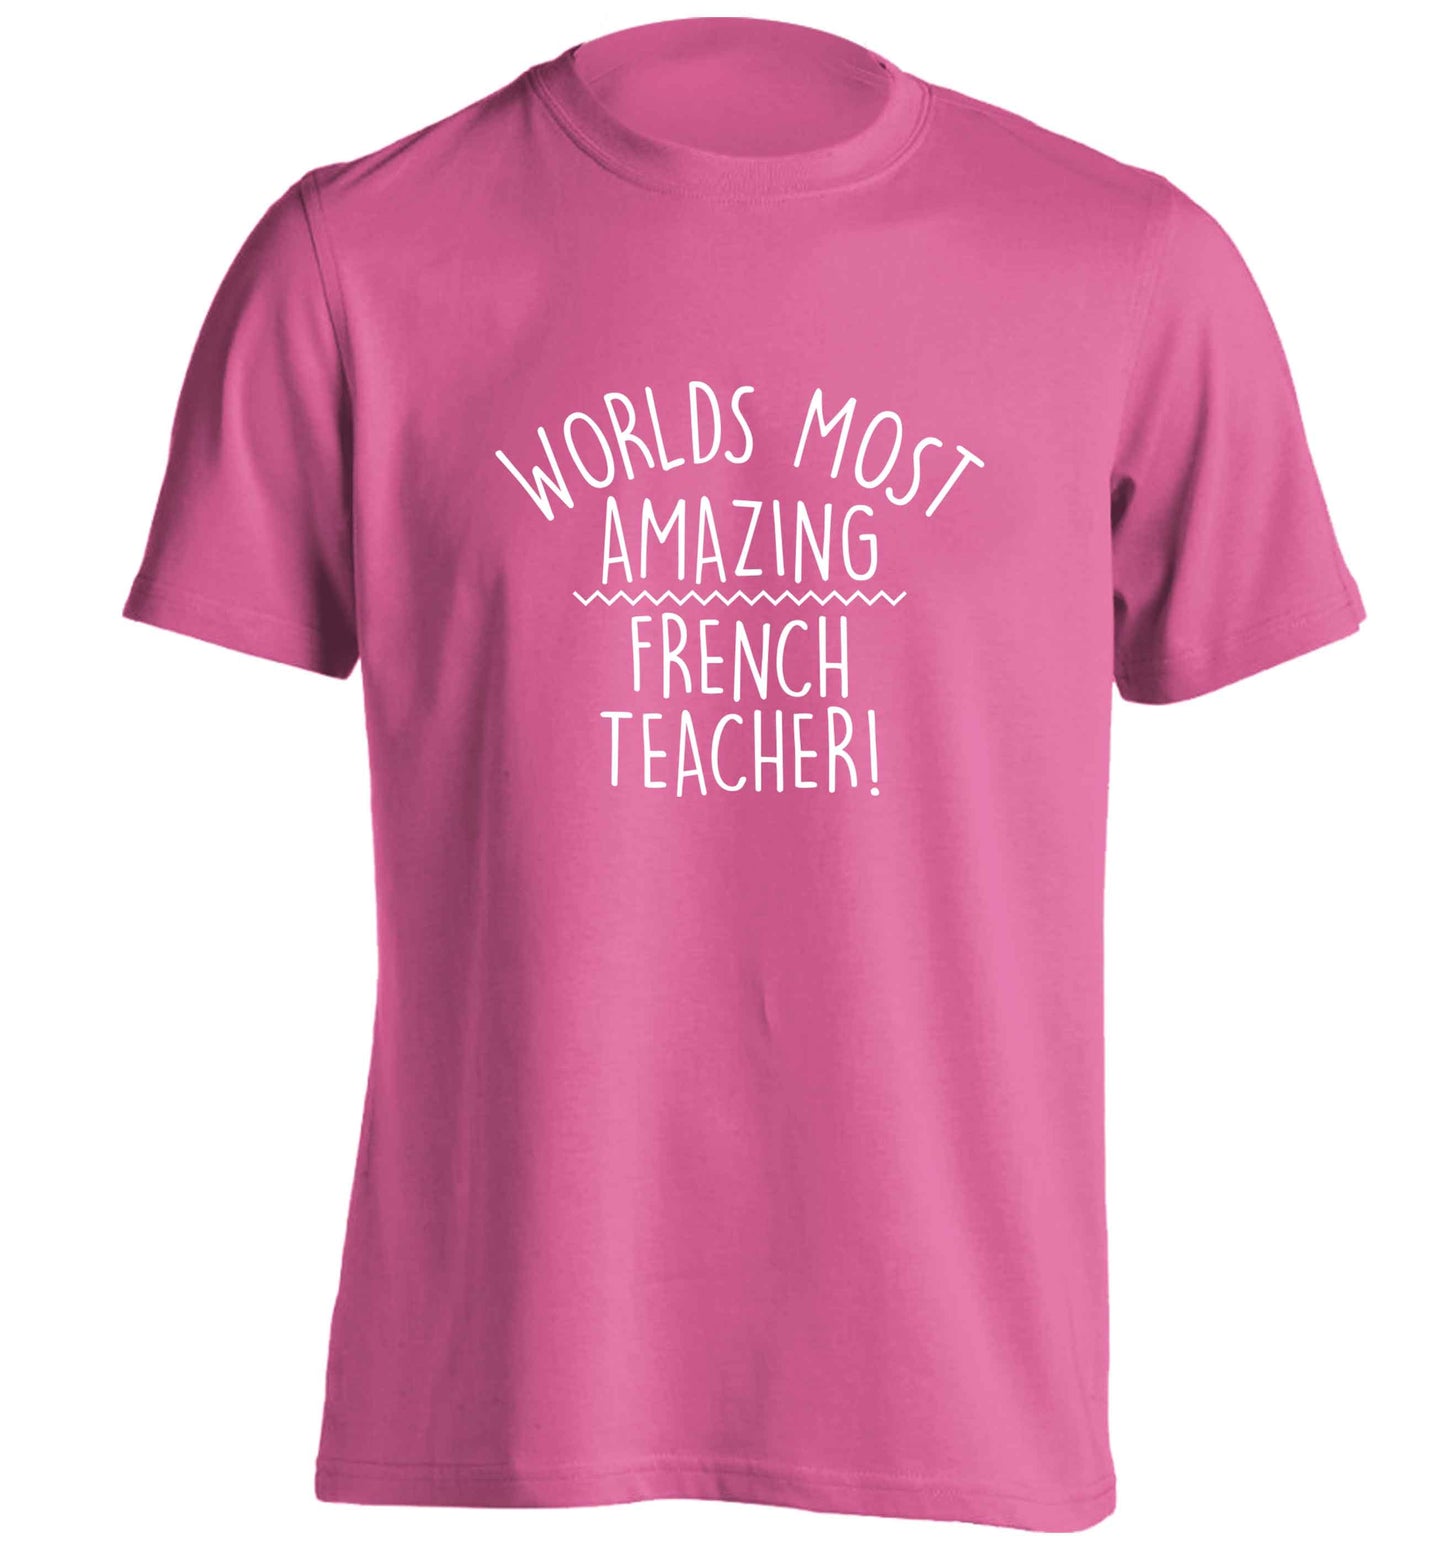 Worlds most amazing French teacher adults unisex pink Tshirt 2XL